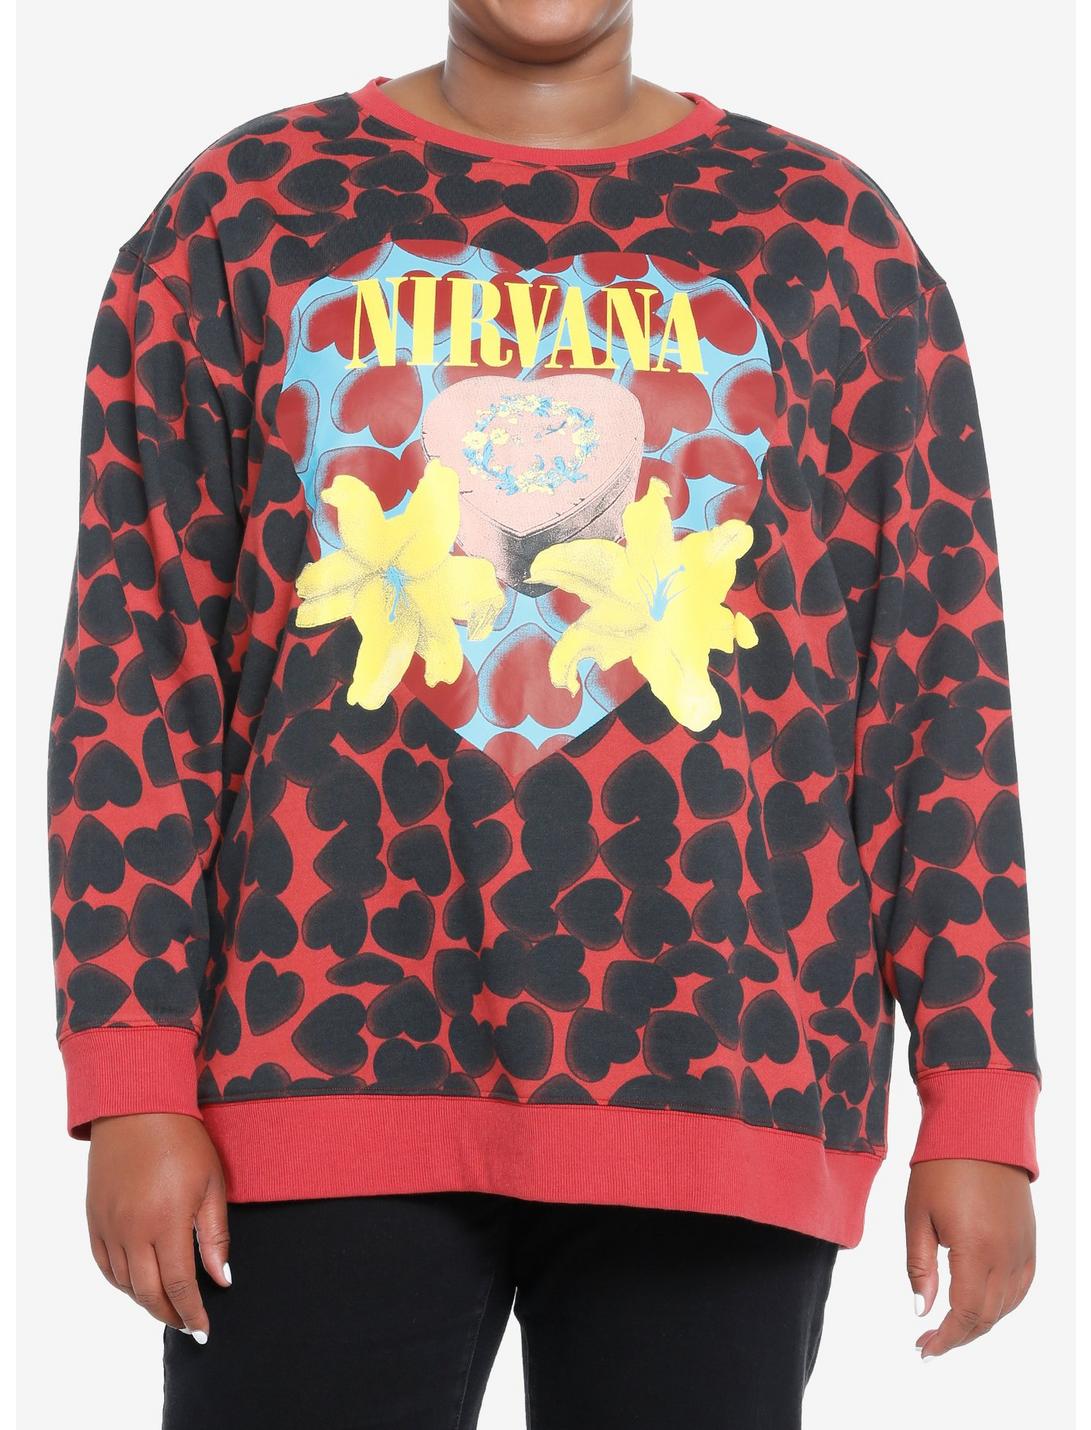 Nirvana Heart-Shaped Box Allover Print Girls Sweatshirt Plus Size, MULTI, hi-res